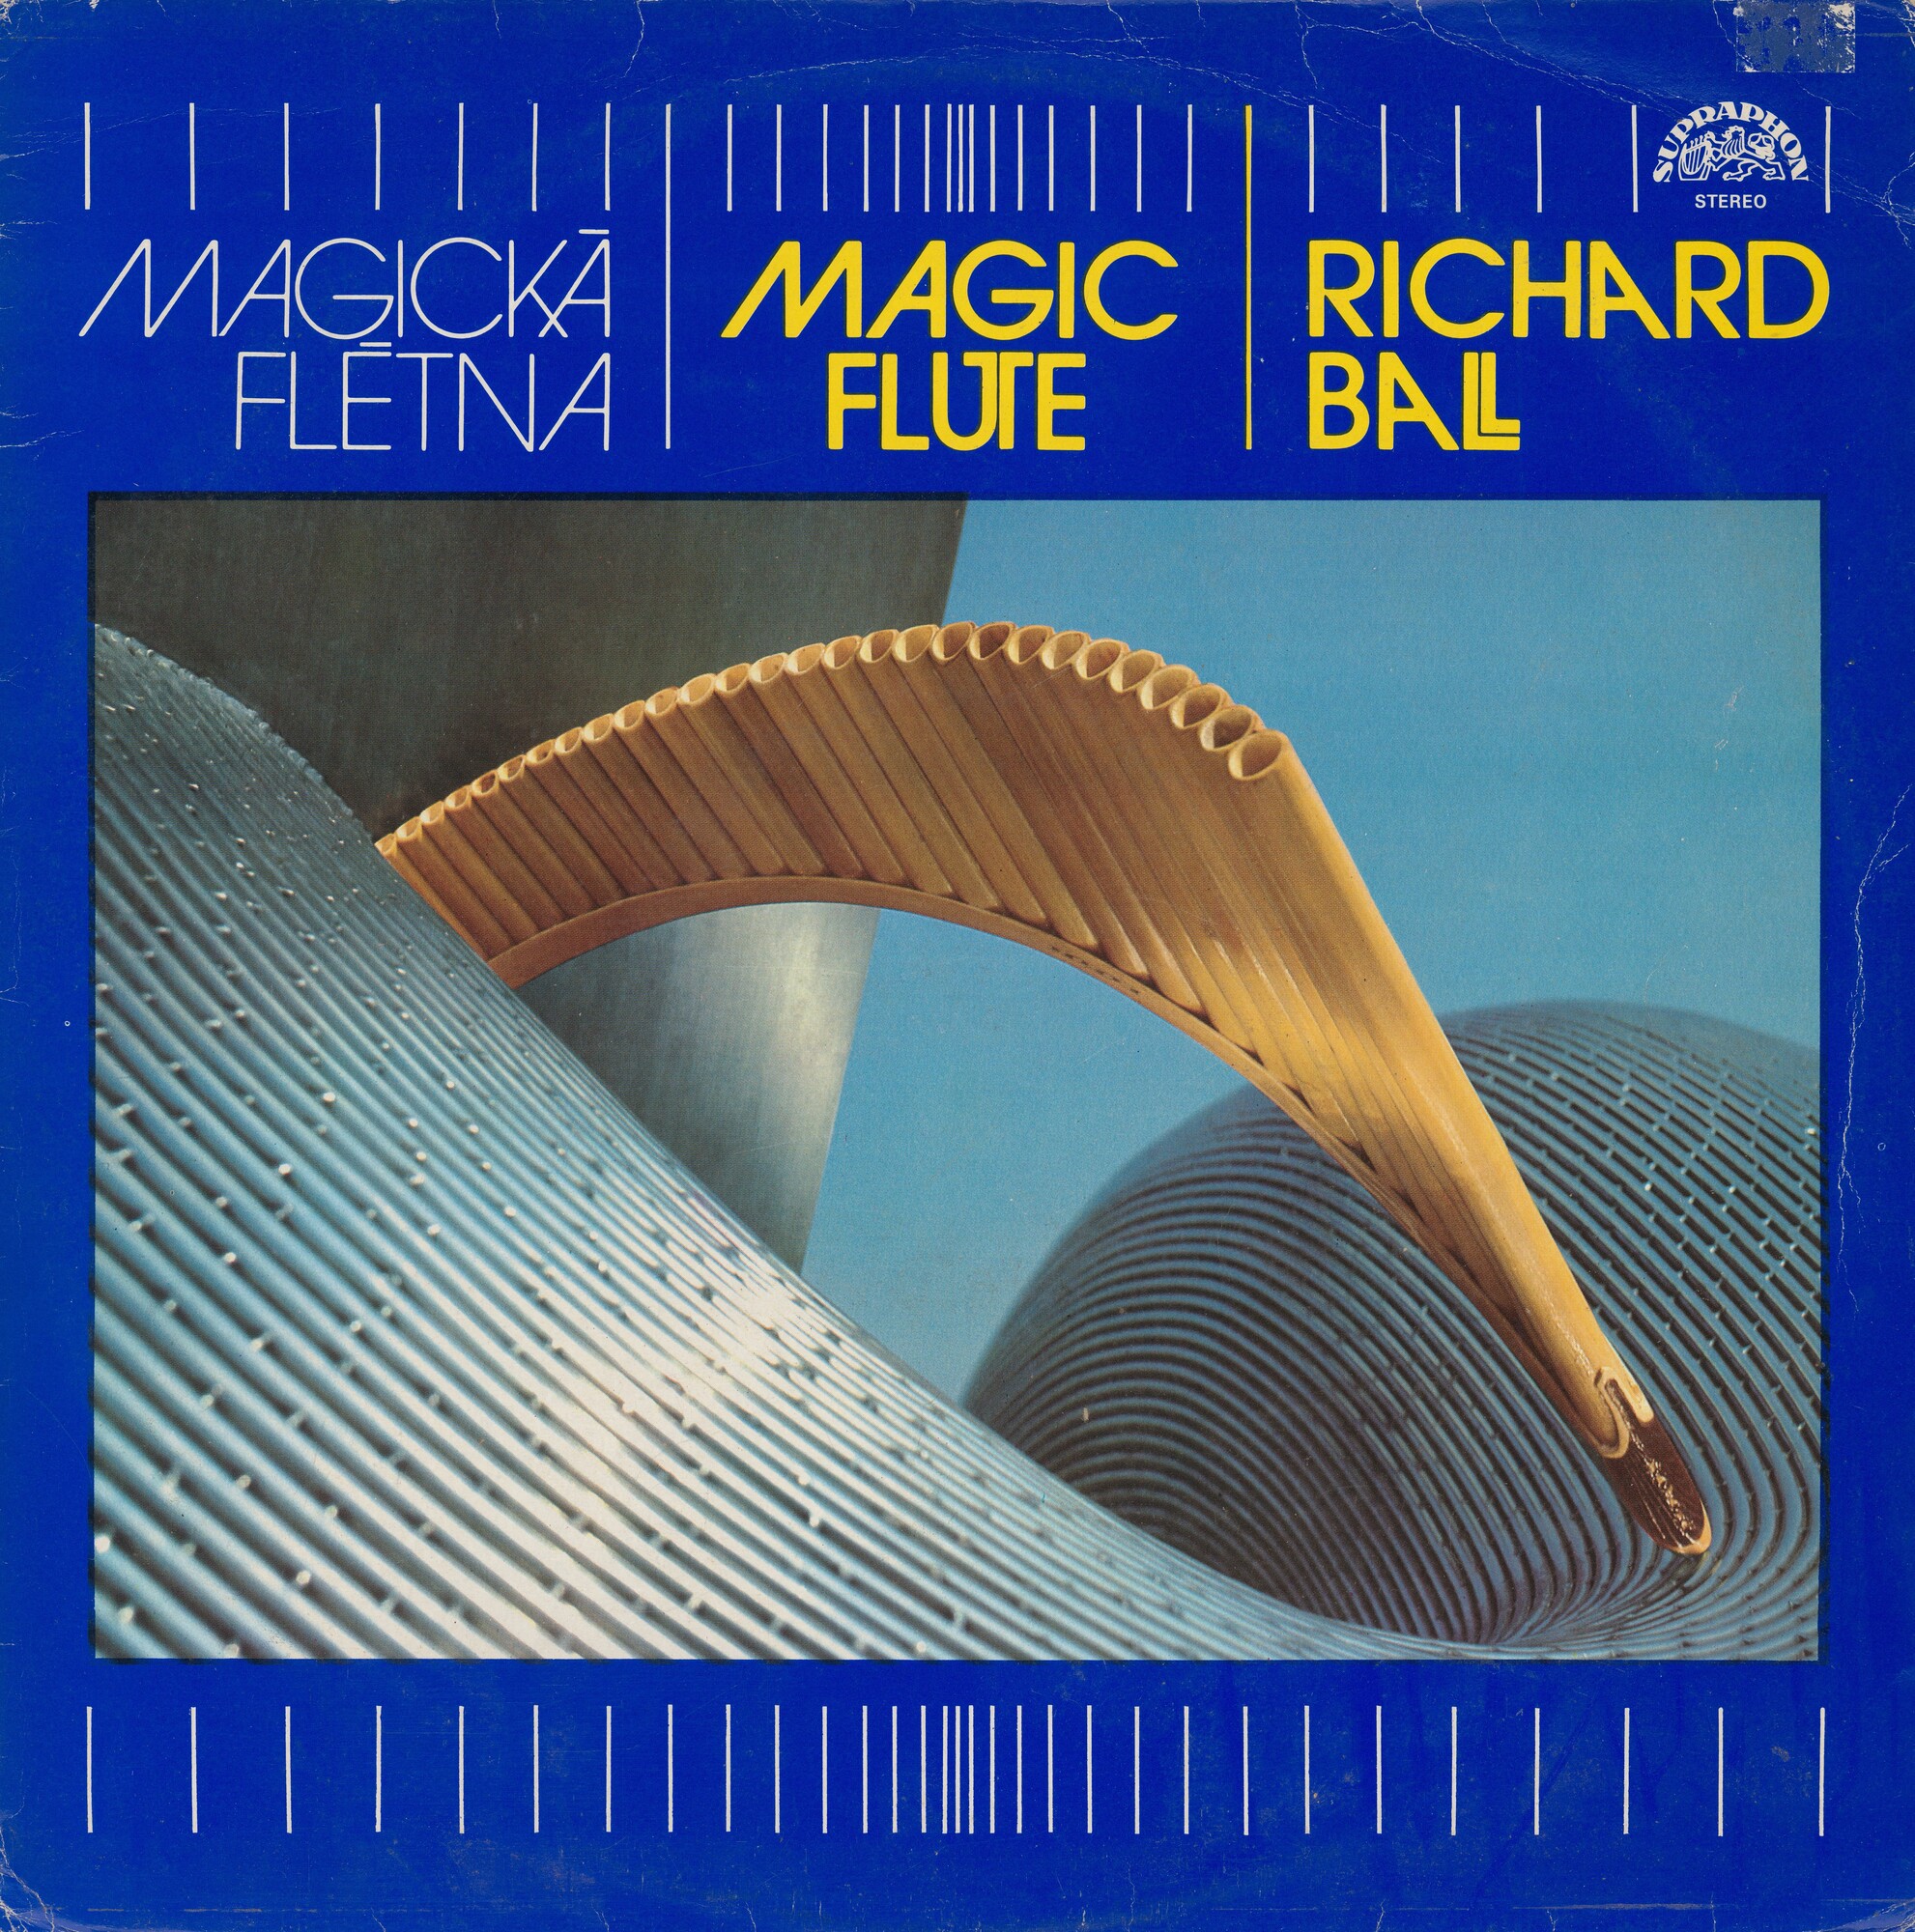 Richard Ball - Magická Flétna - Magic Flute [по заказу чешской фирмы SUPRAPHON 1113 3499]